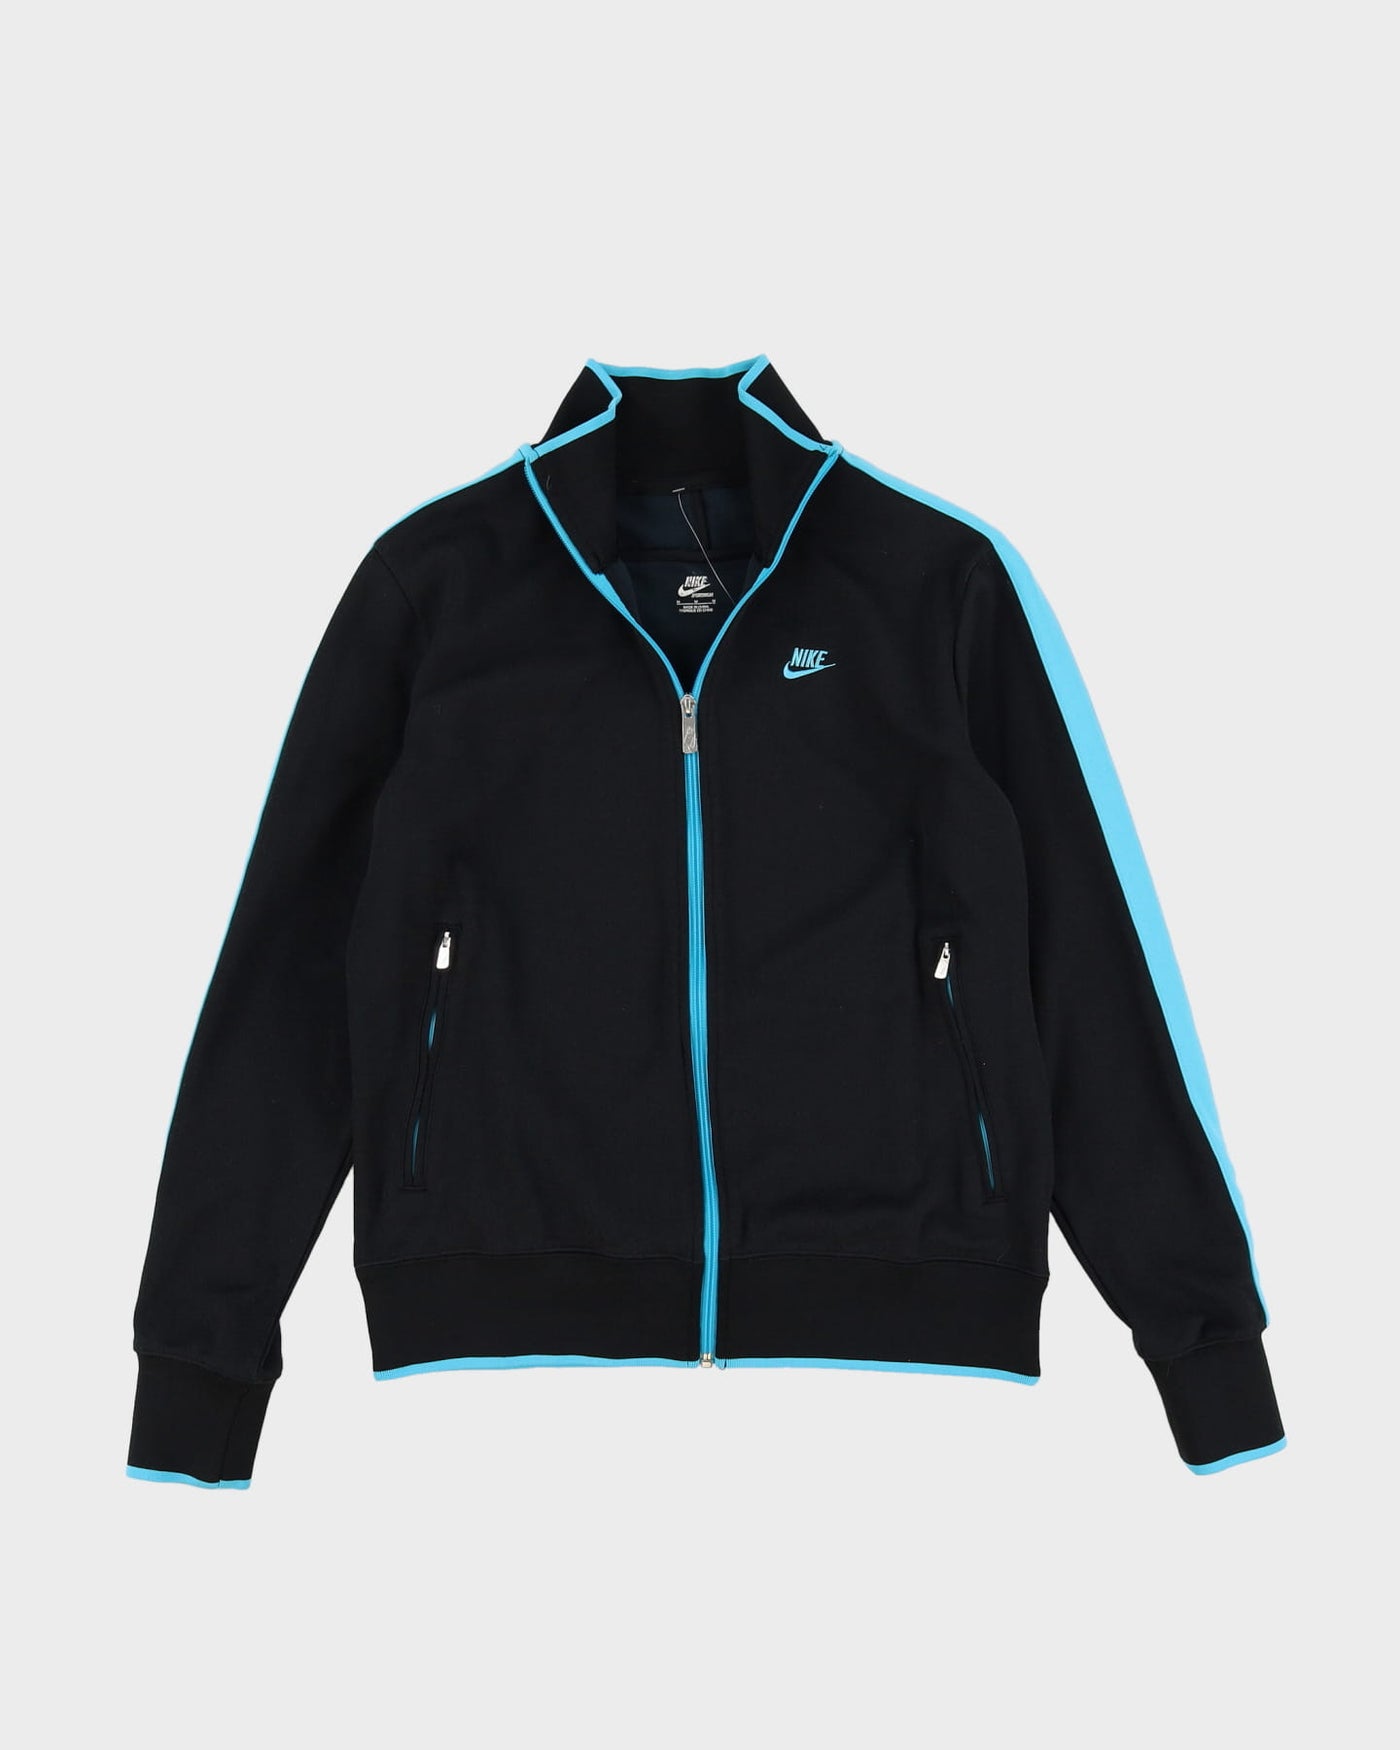 Nike Black / Blue Track Jacket - M